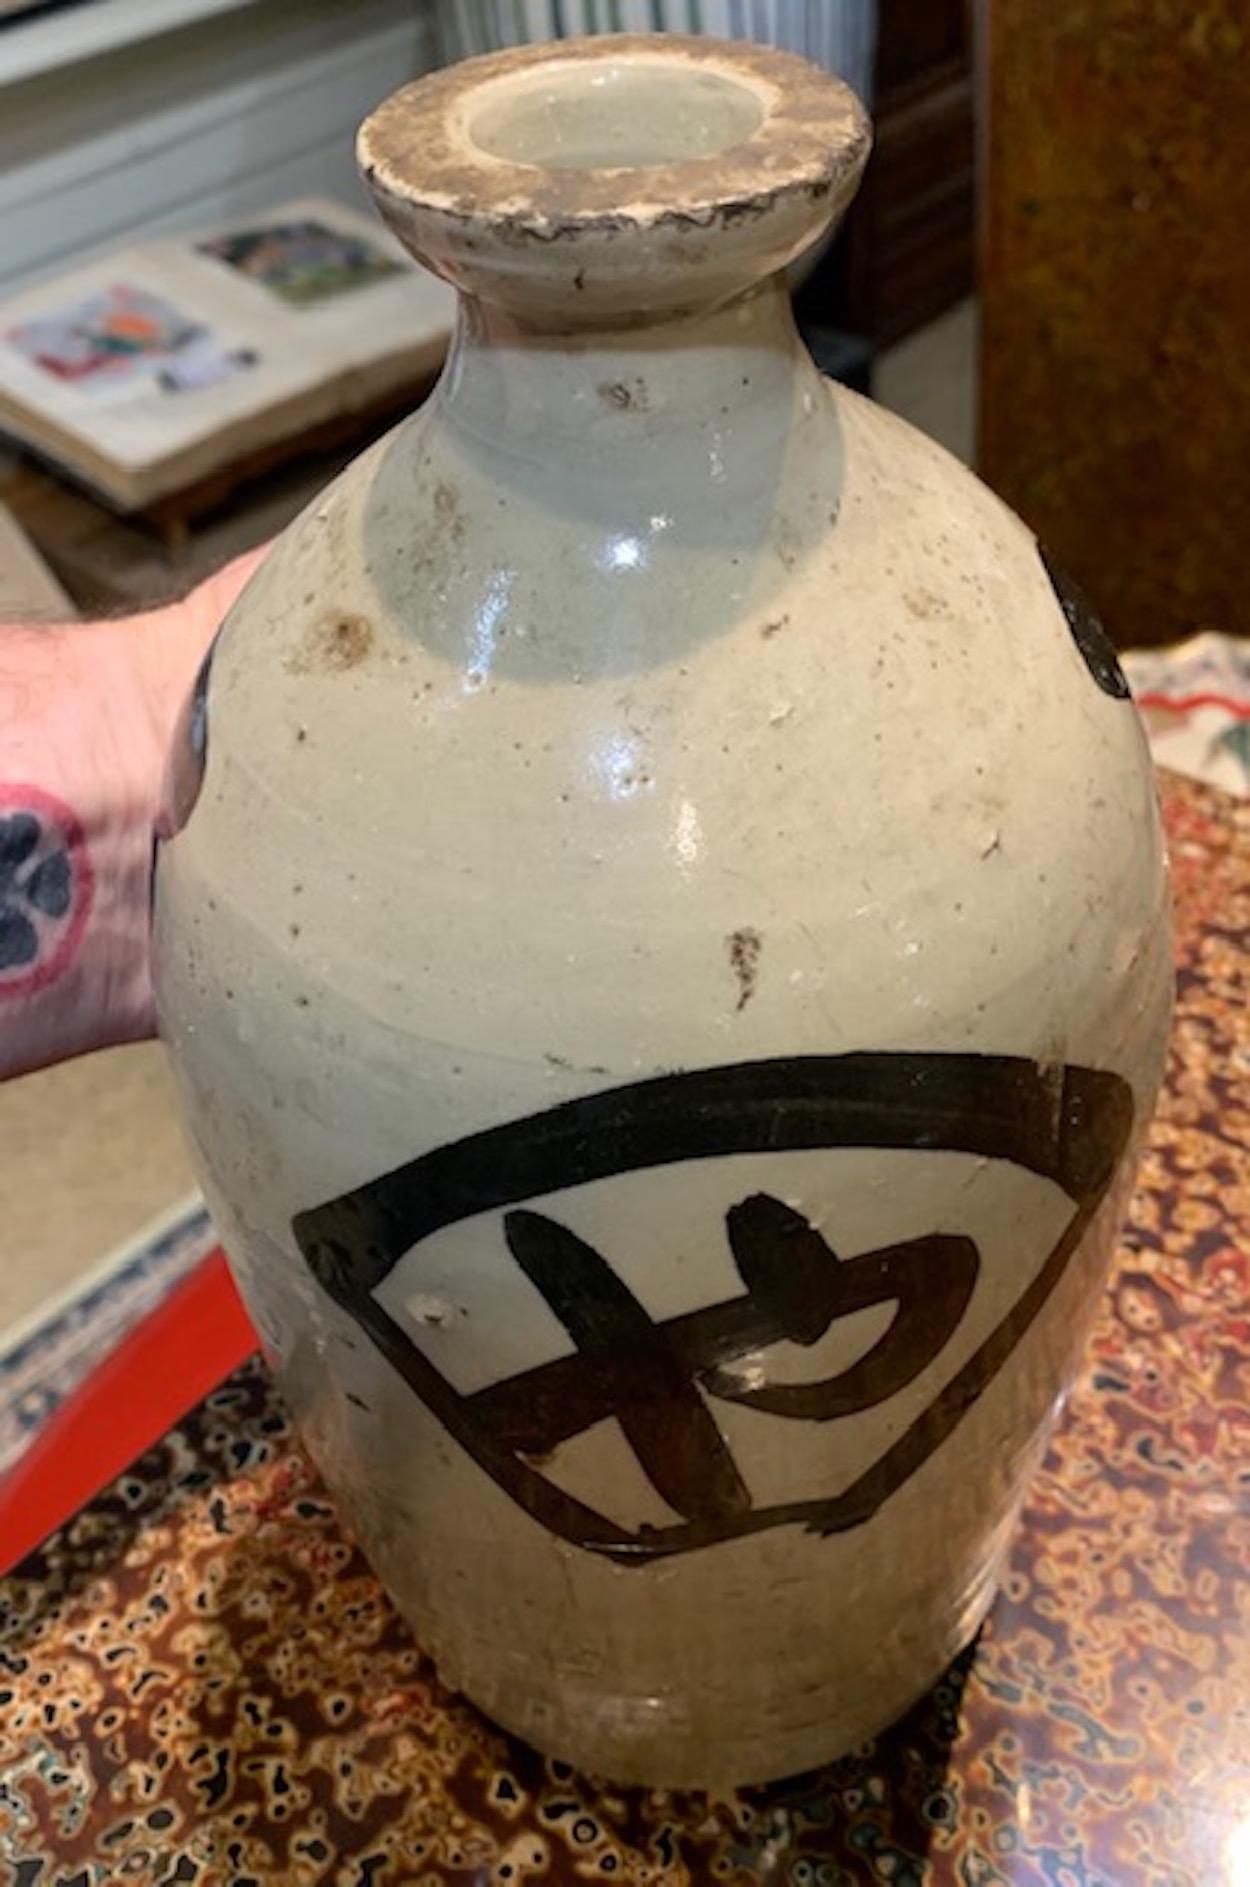 Hand-Crafted Japanese Tokkuri, 'Sake or shochu bottle' with Glazed Characters